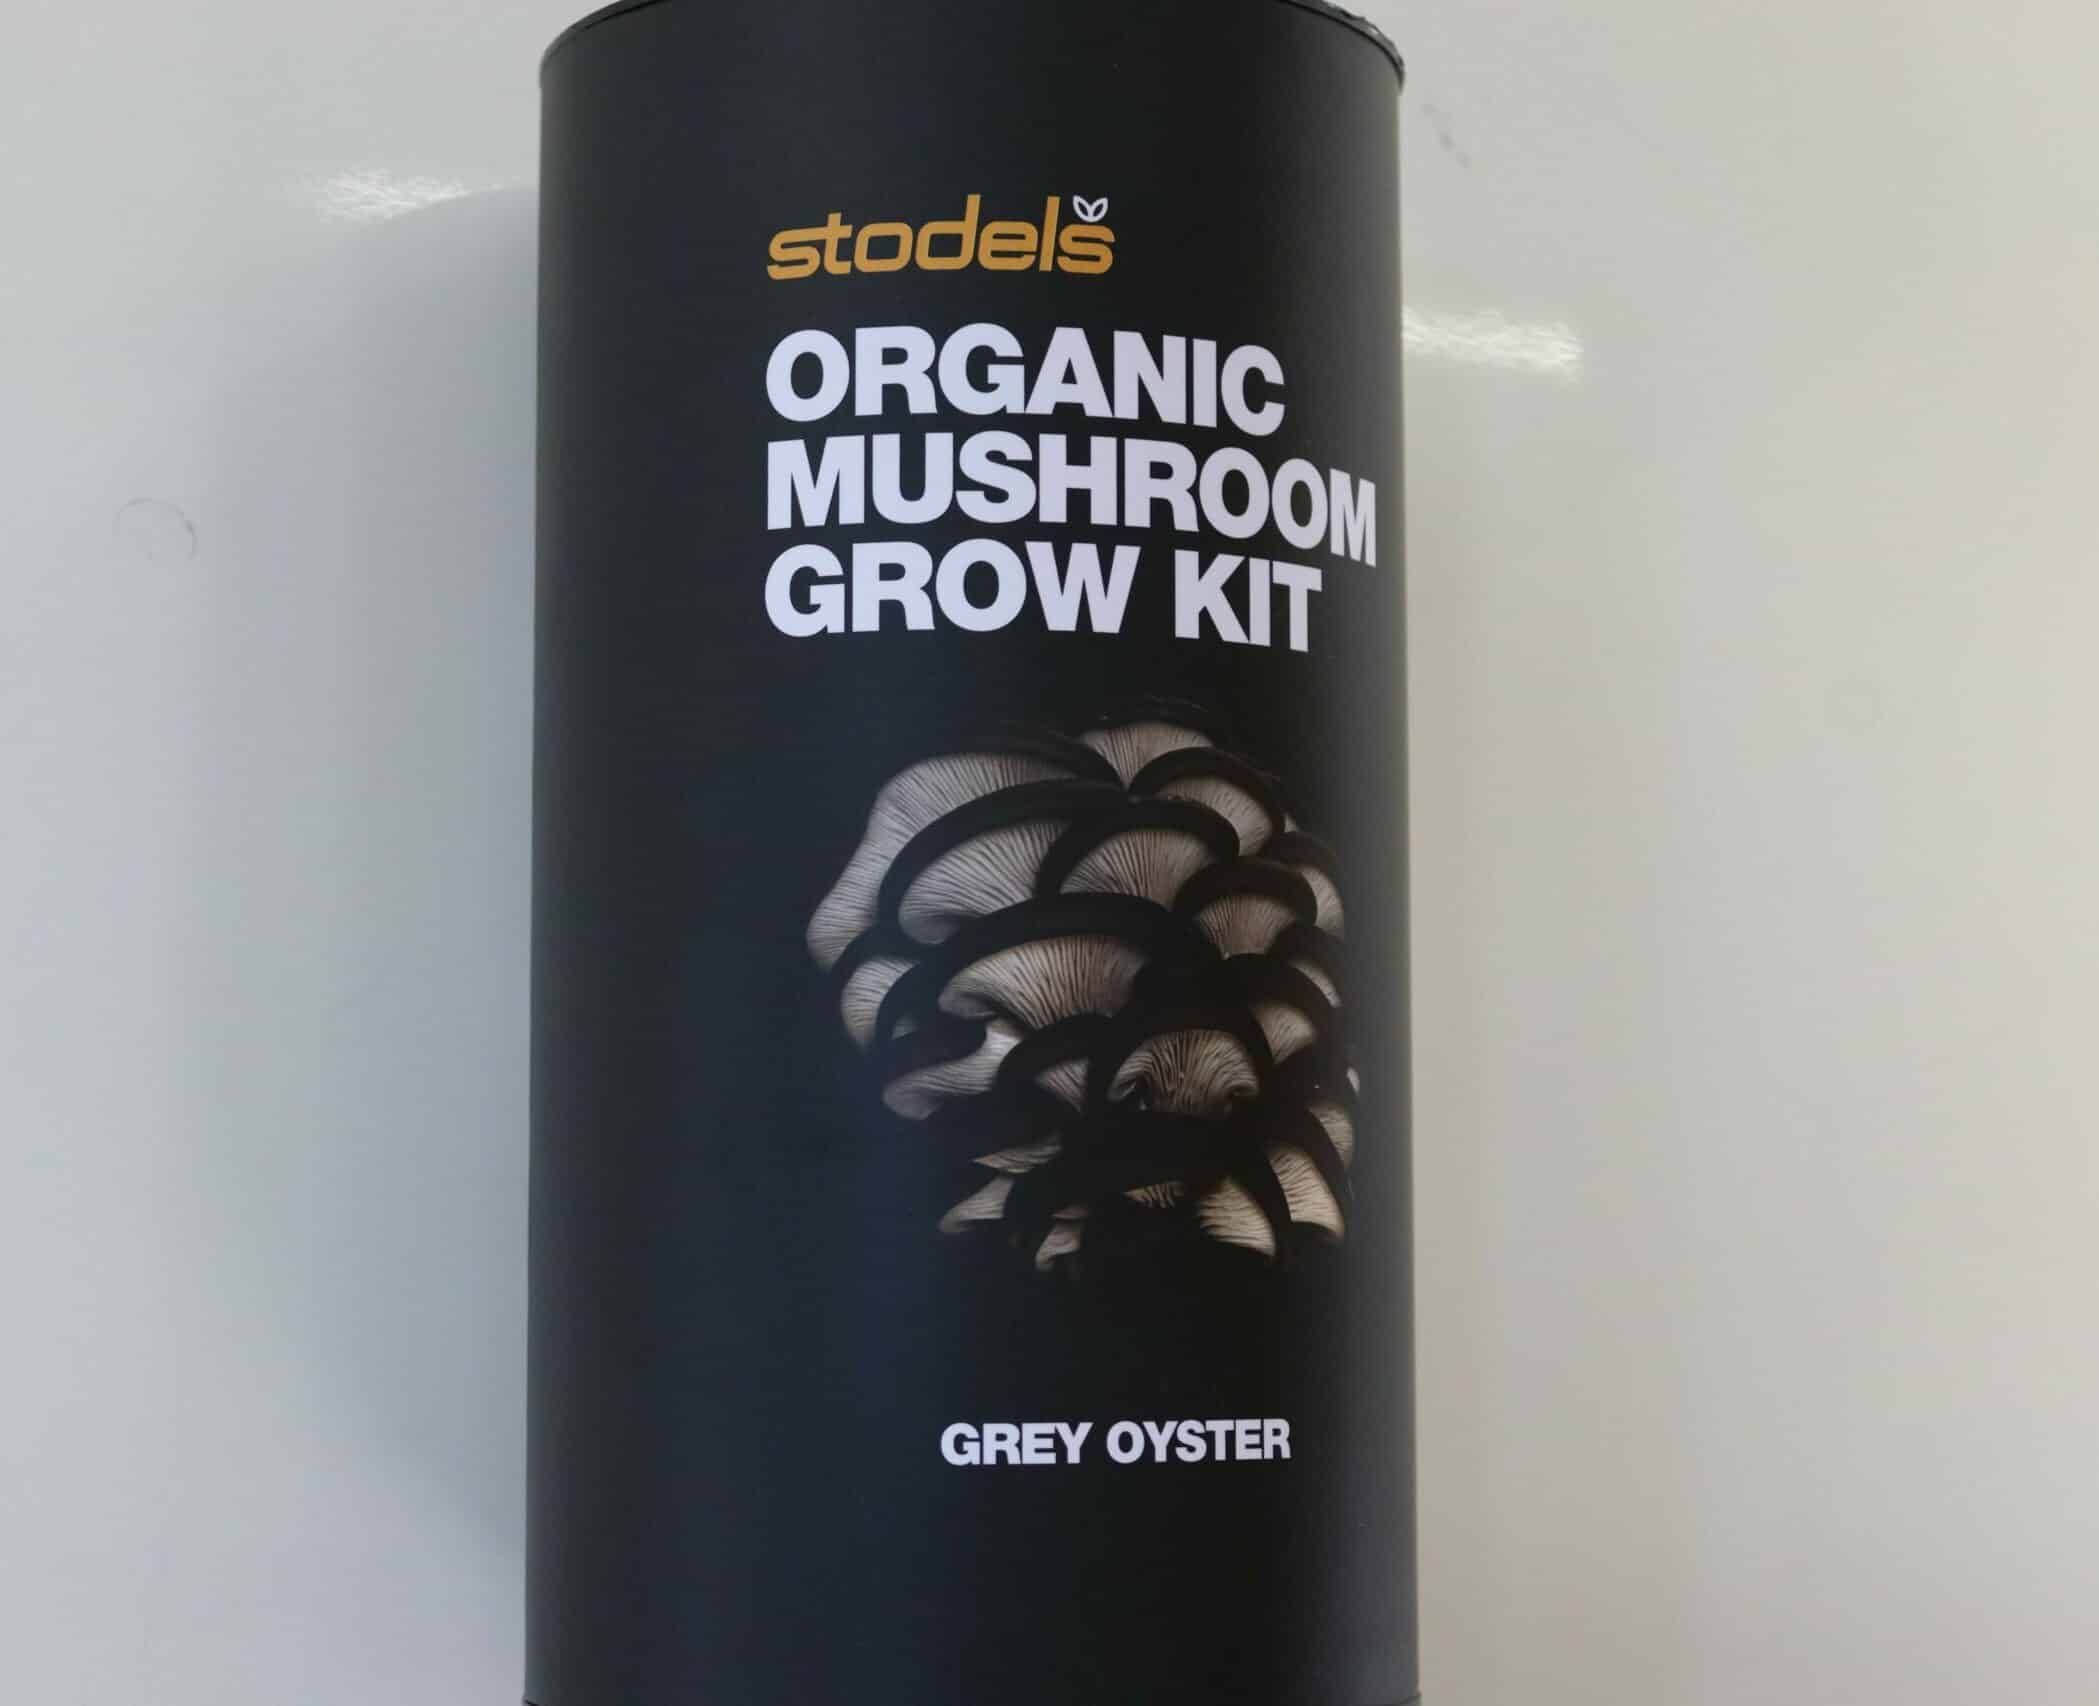 Stodels organic mushroom grow kit grey oyster in a black tube